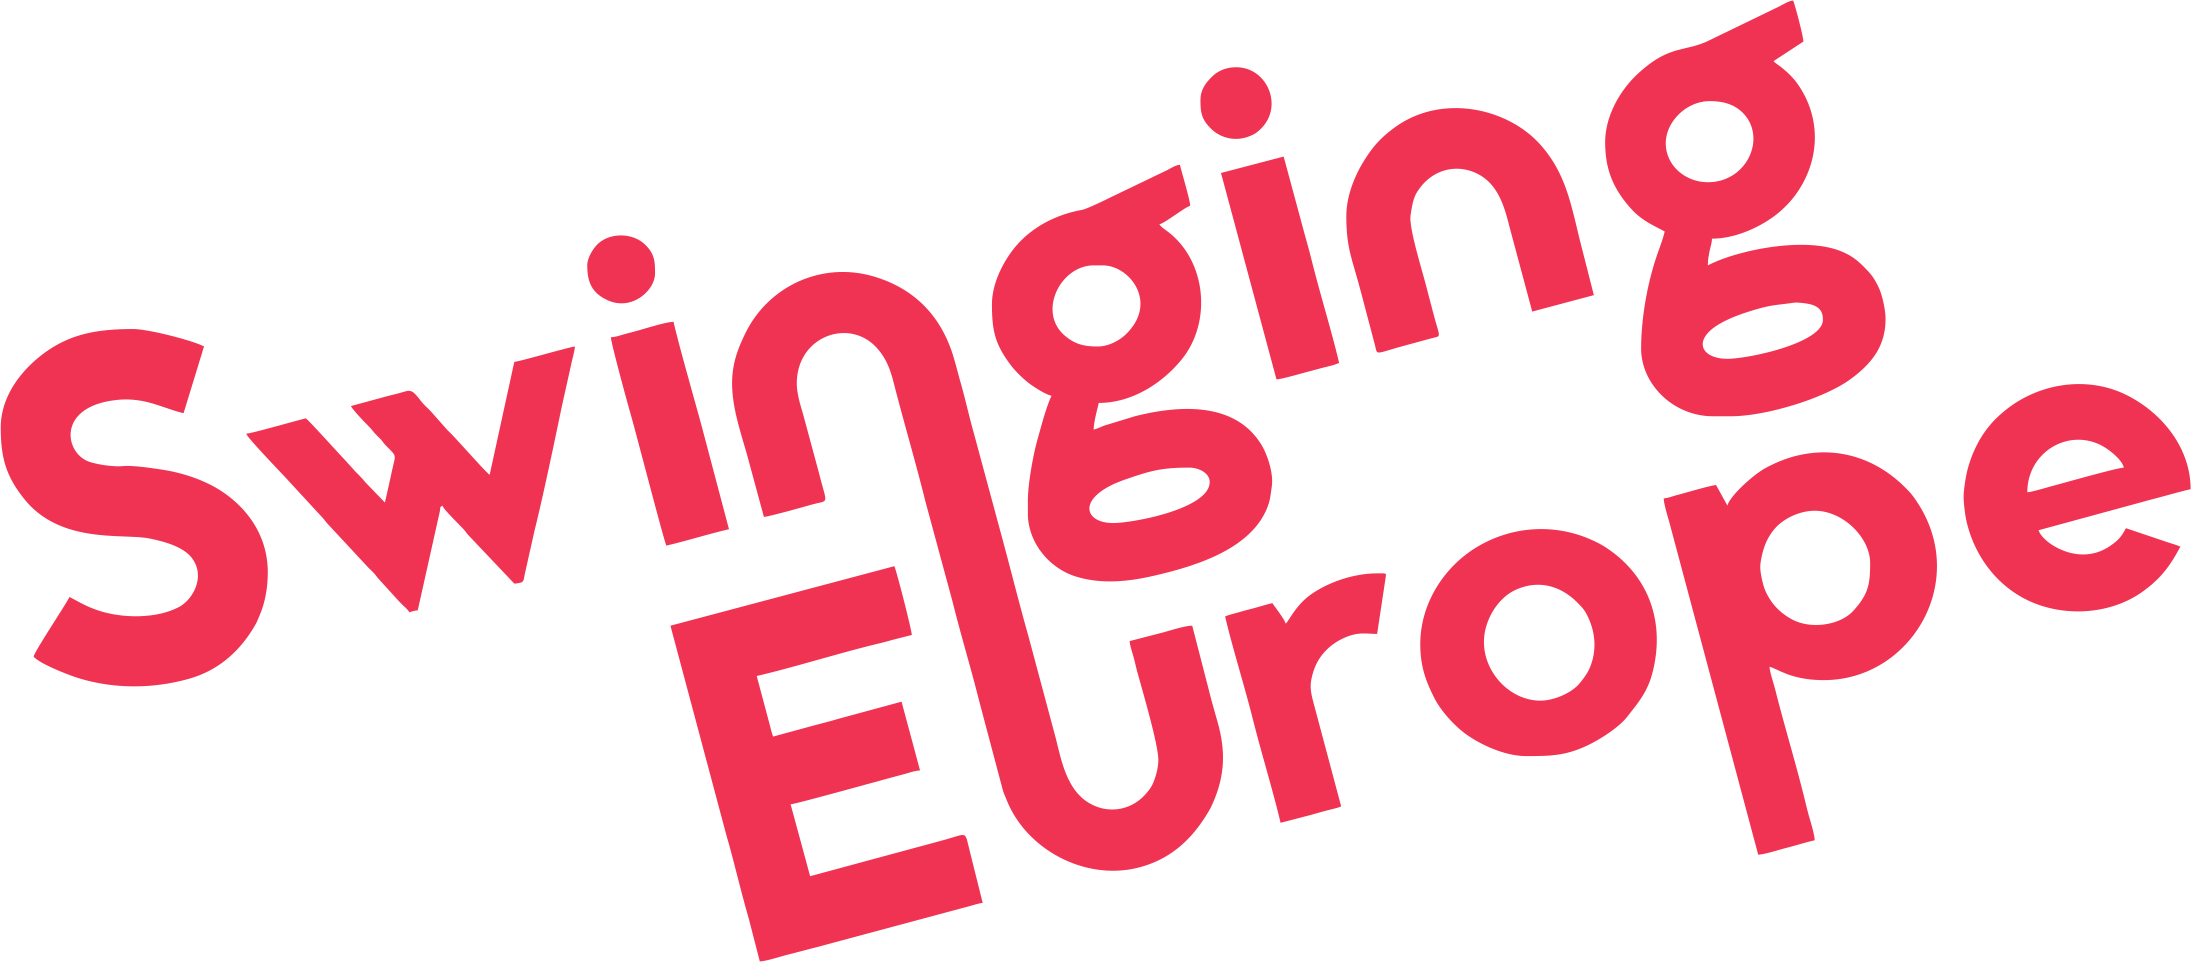 Swinging Europe Logo